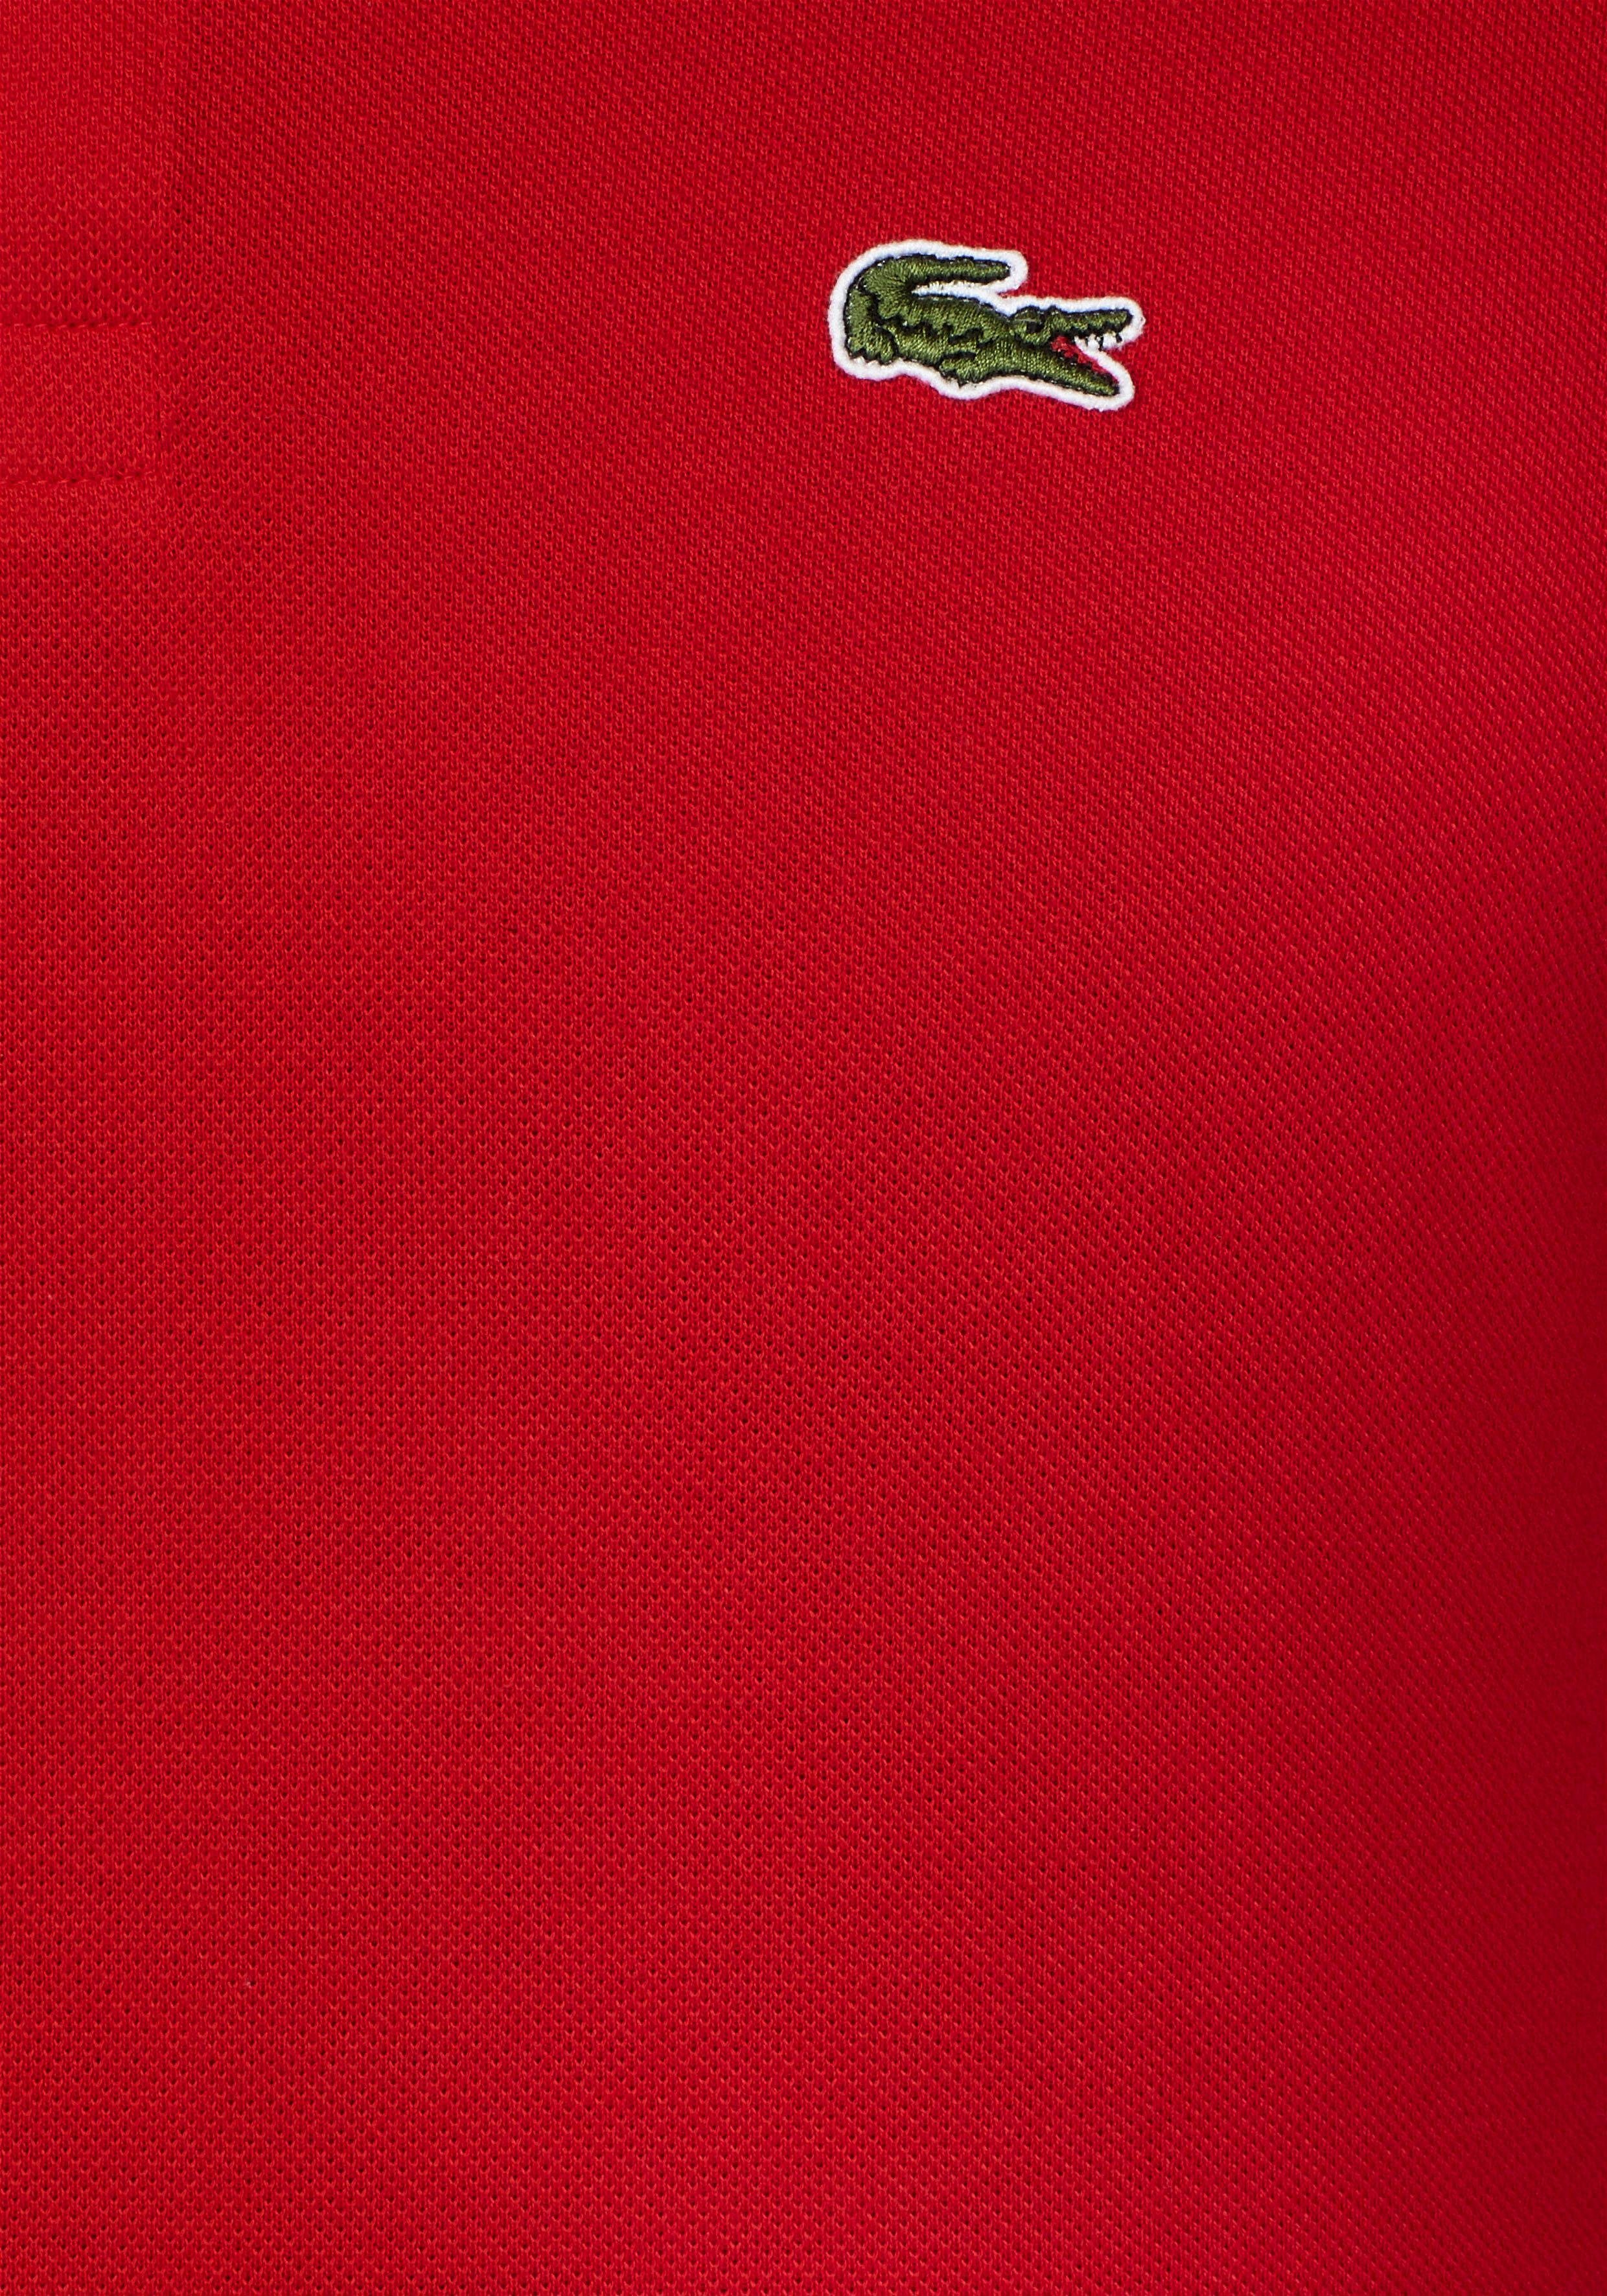 Poloshirt Lacoste in Knöpfen rot-knallrot Perlmuttoptik (1-tlg) mit